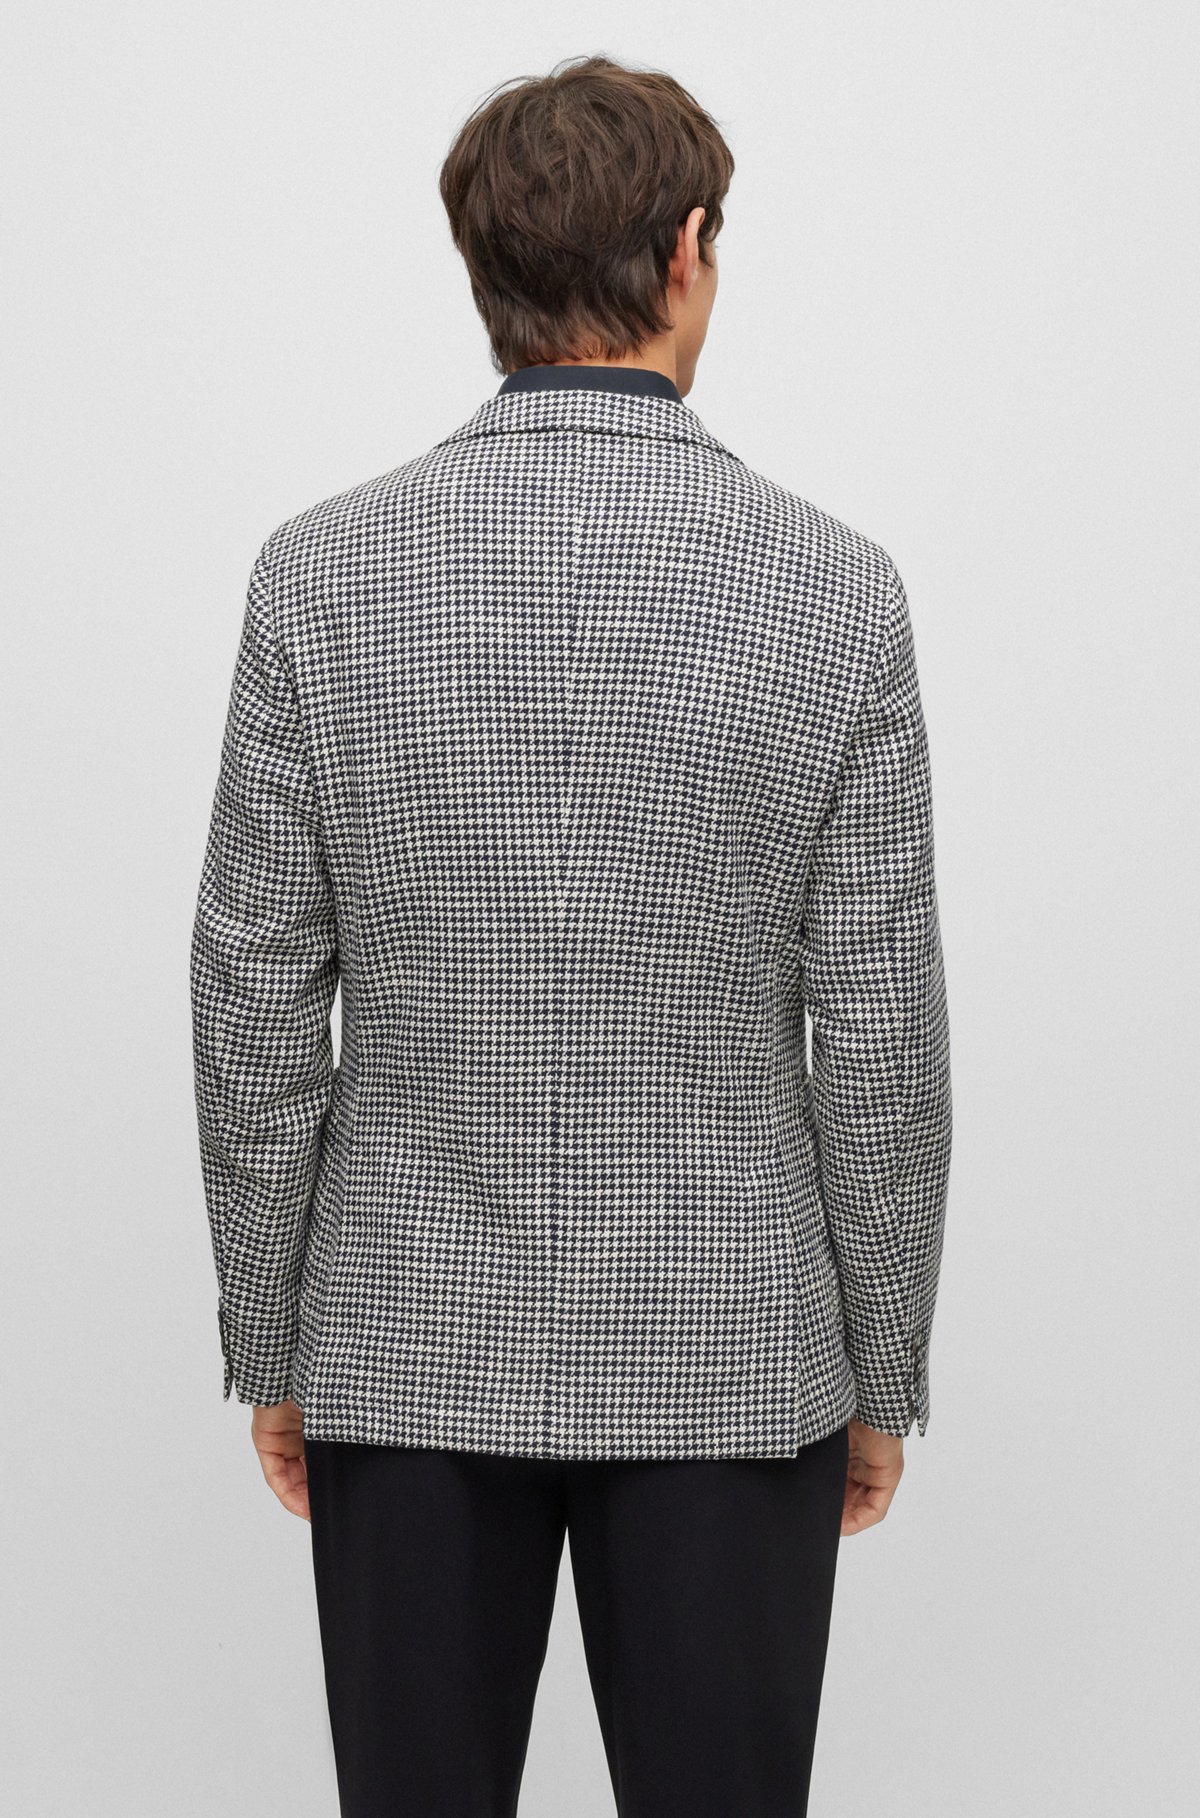 Slim-fit jacket in a houndstooth cotton blend, Patterned